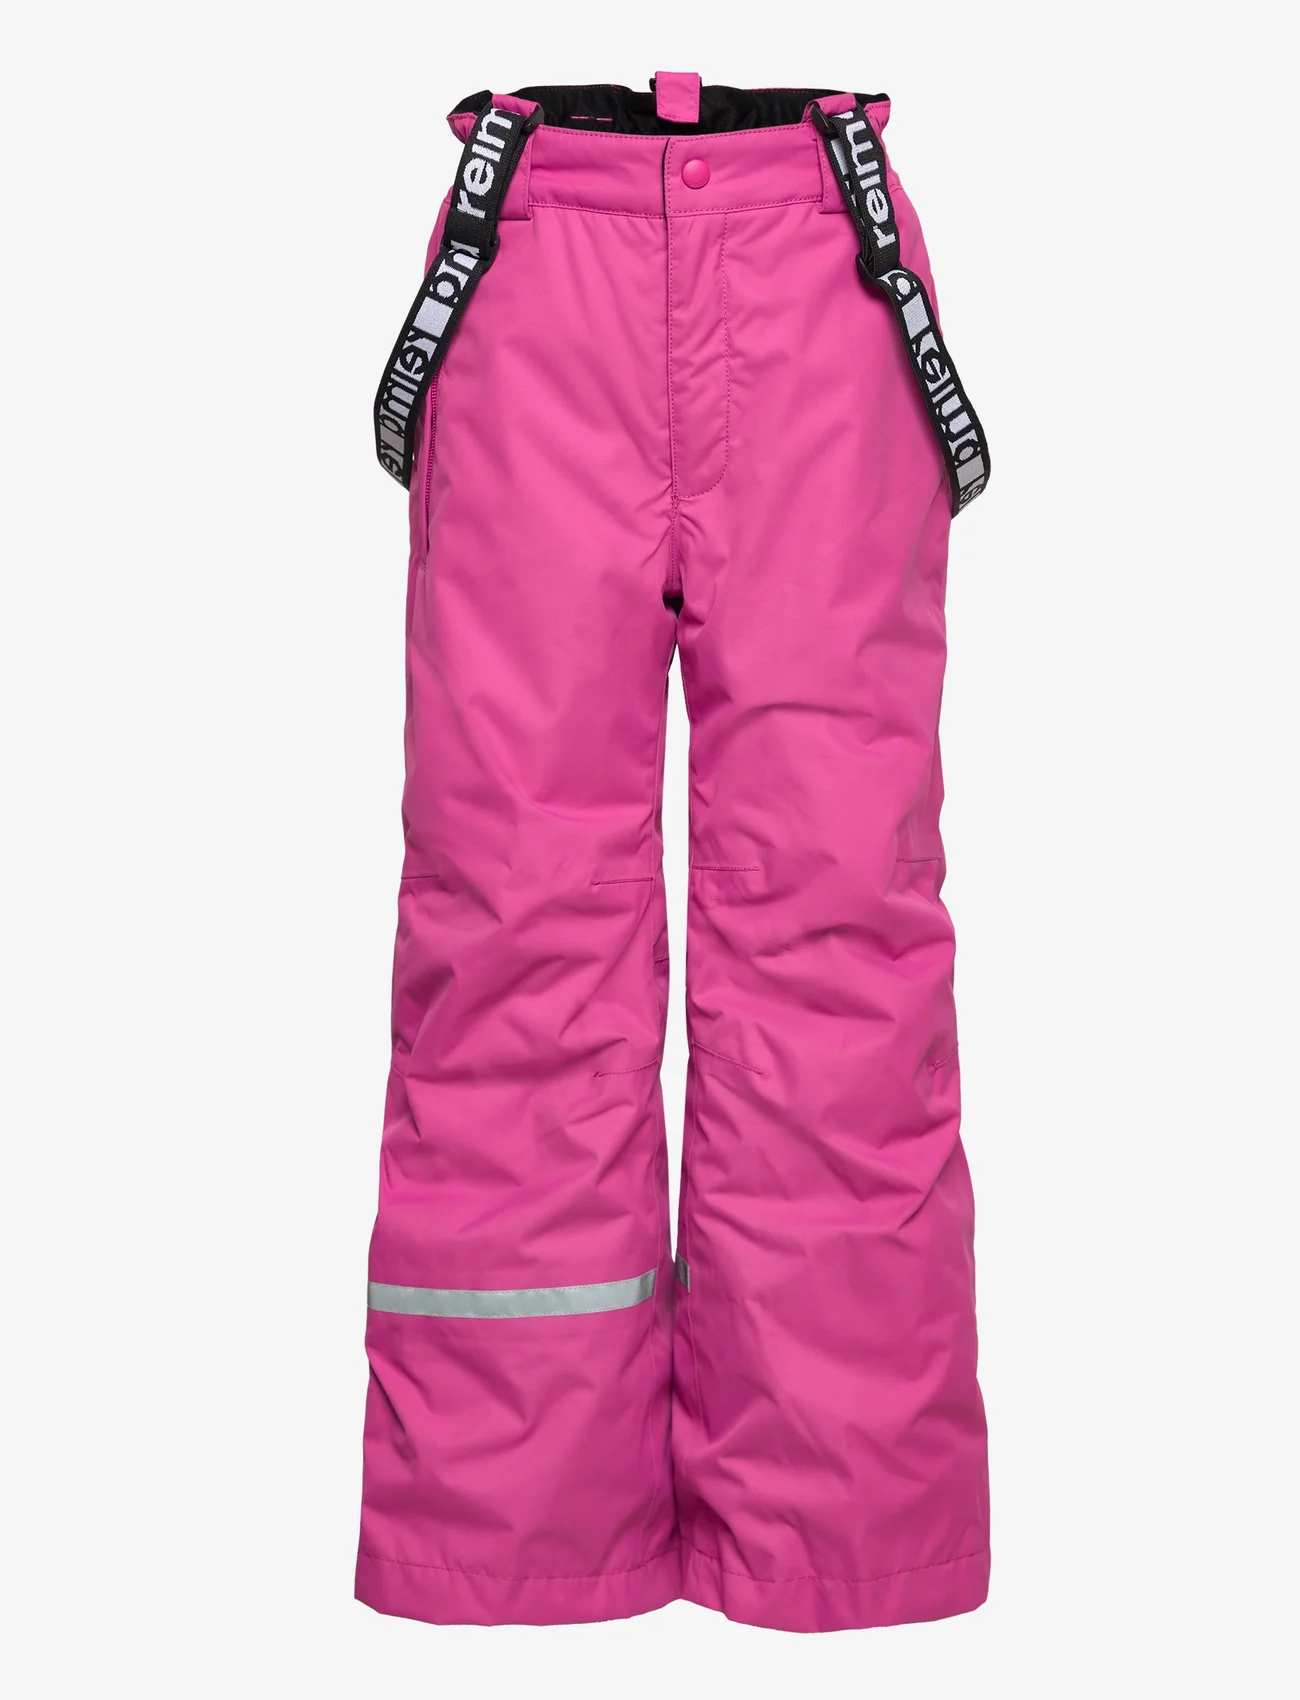 Reima - Winter pants, Tuokio - friluftsbyxor - magenta purple - 0